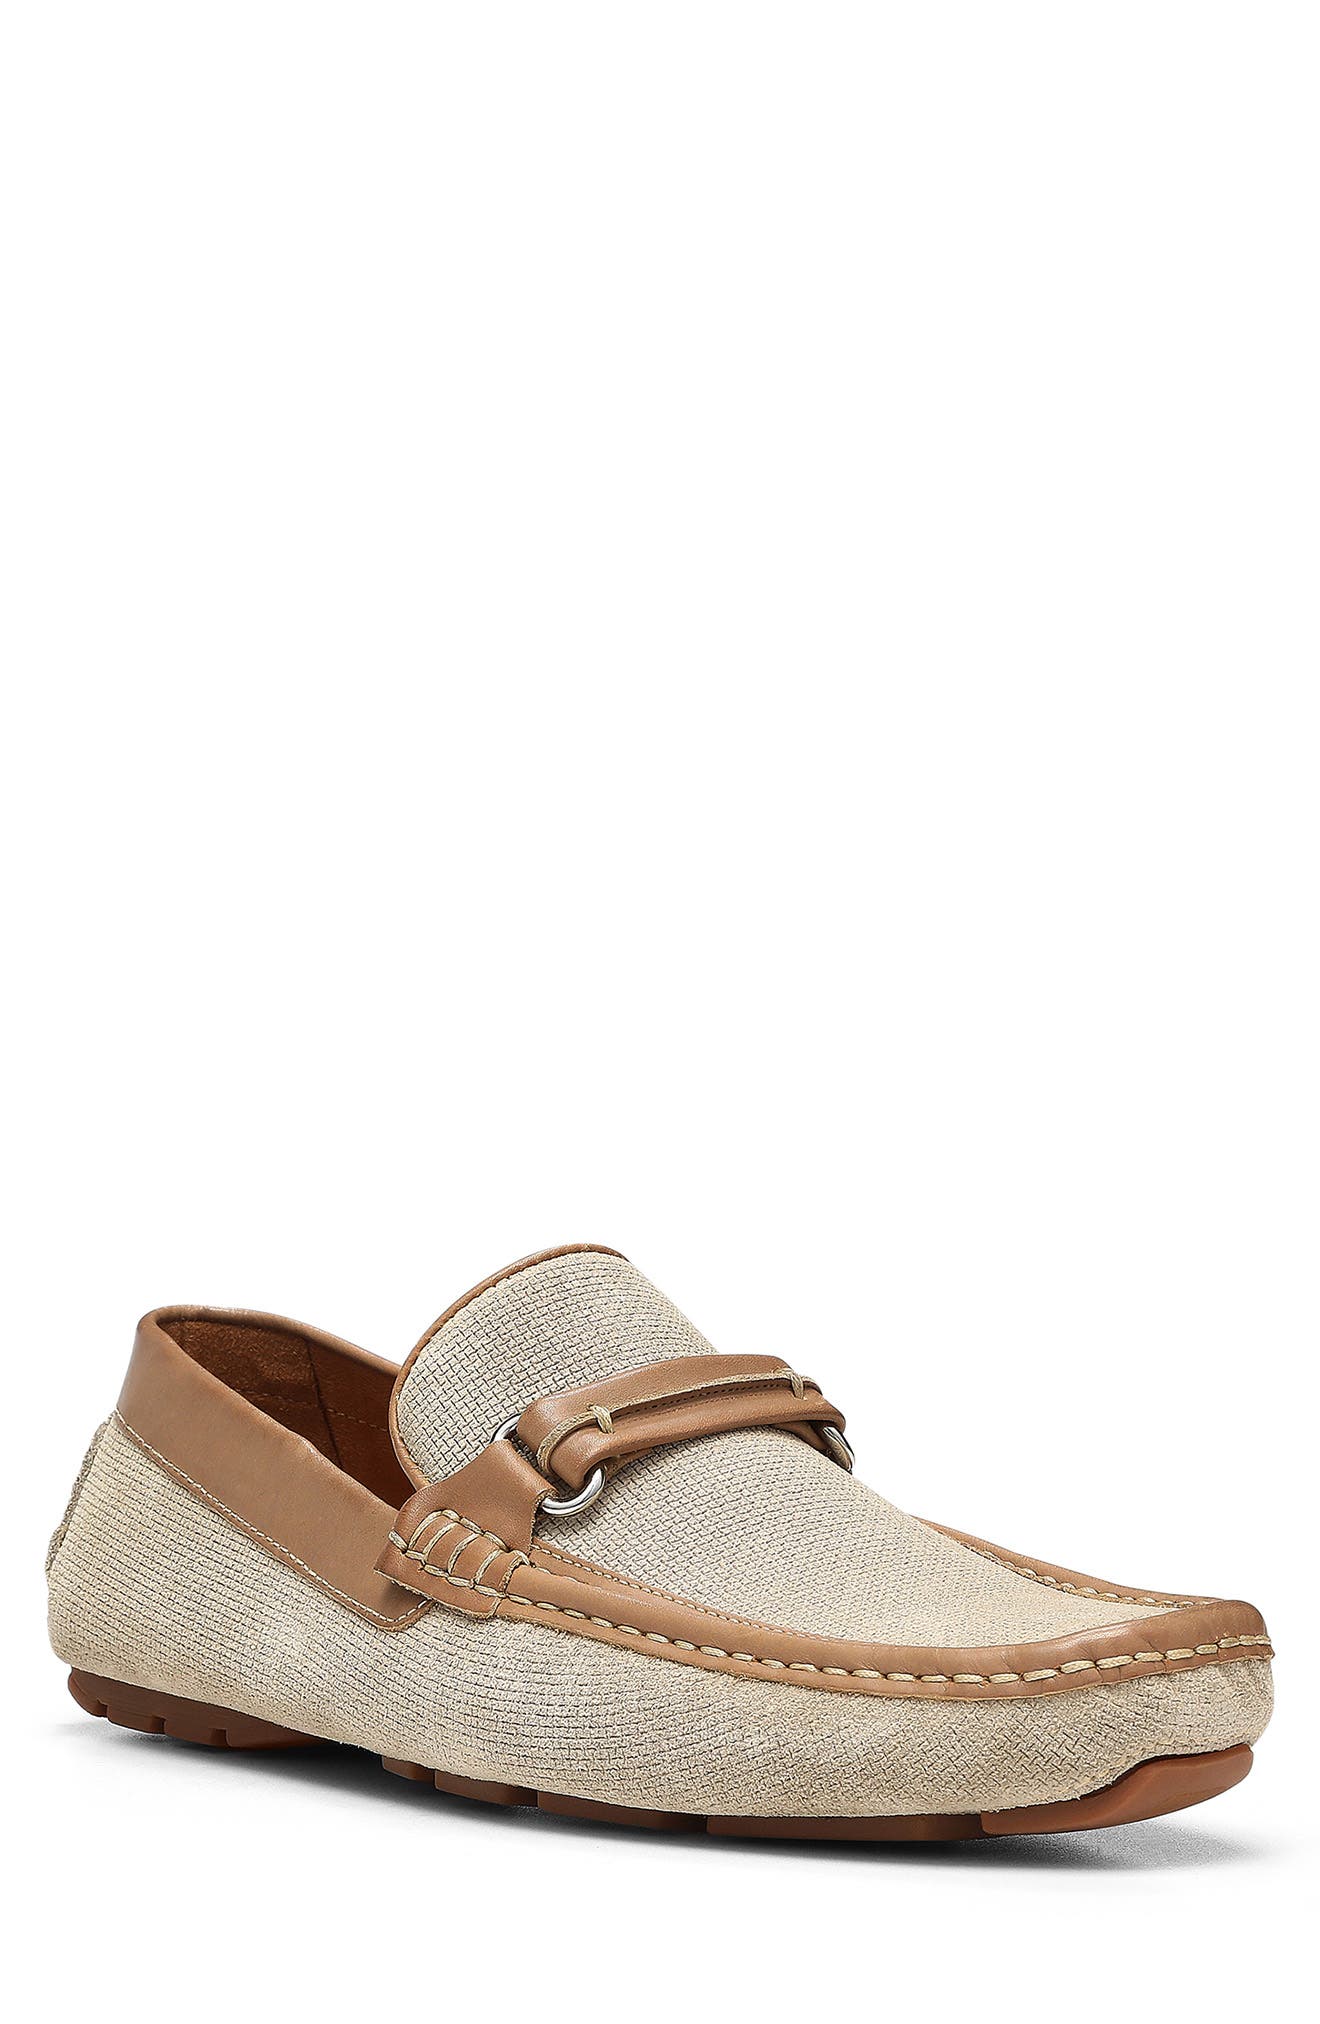 Donald J Pliner Shine Leather Loafer in Brown for Men Mens Shoes Slip-on shoes Loafers 